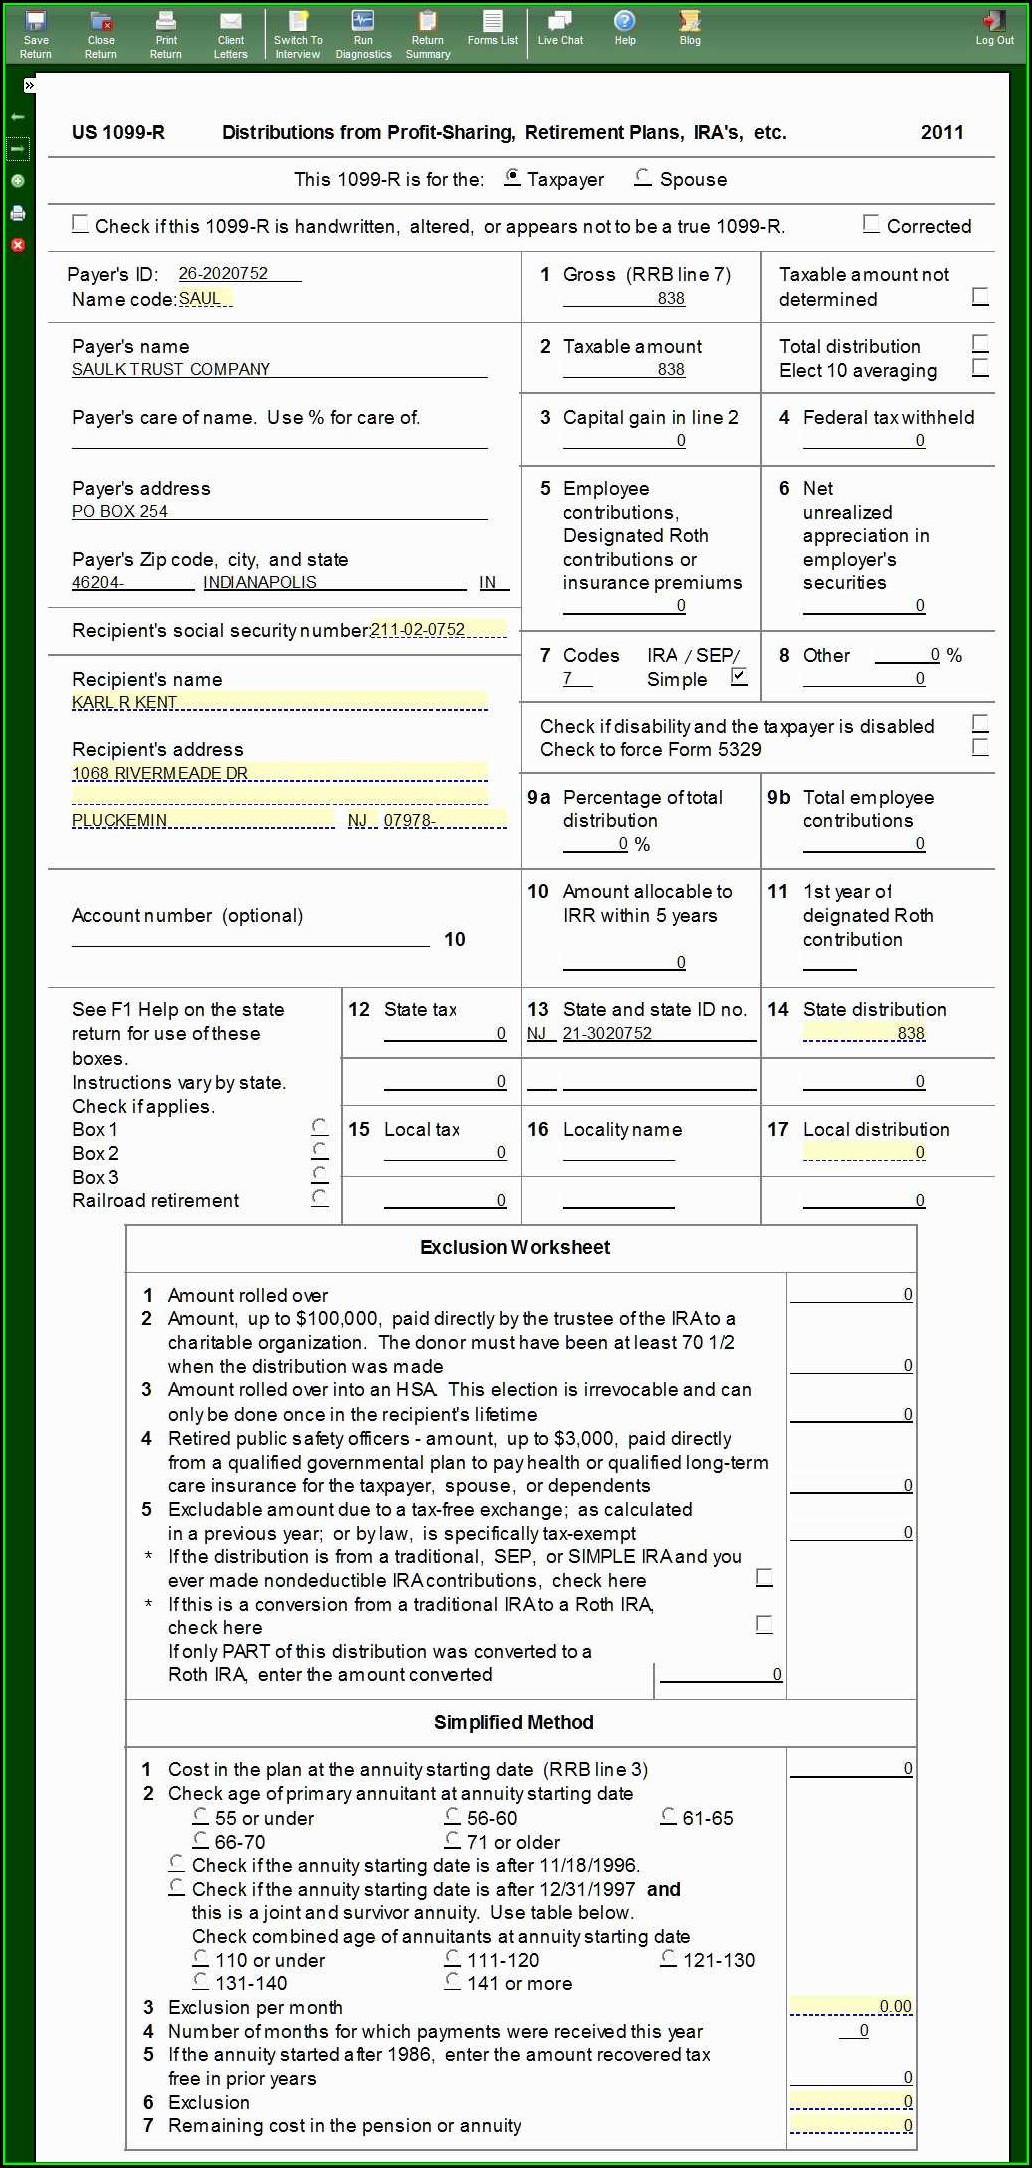 1040a Tax Form 2017 Instructions